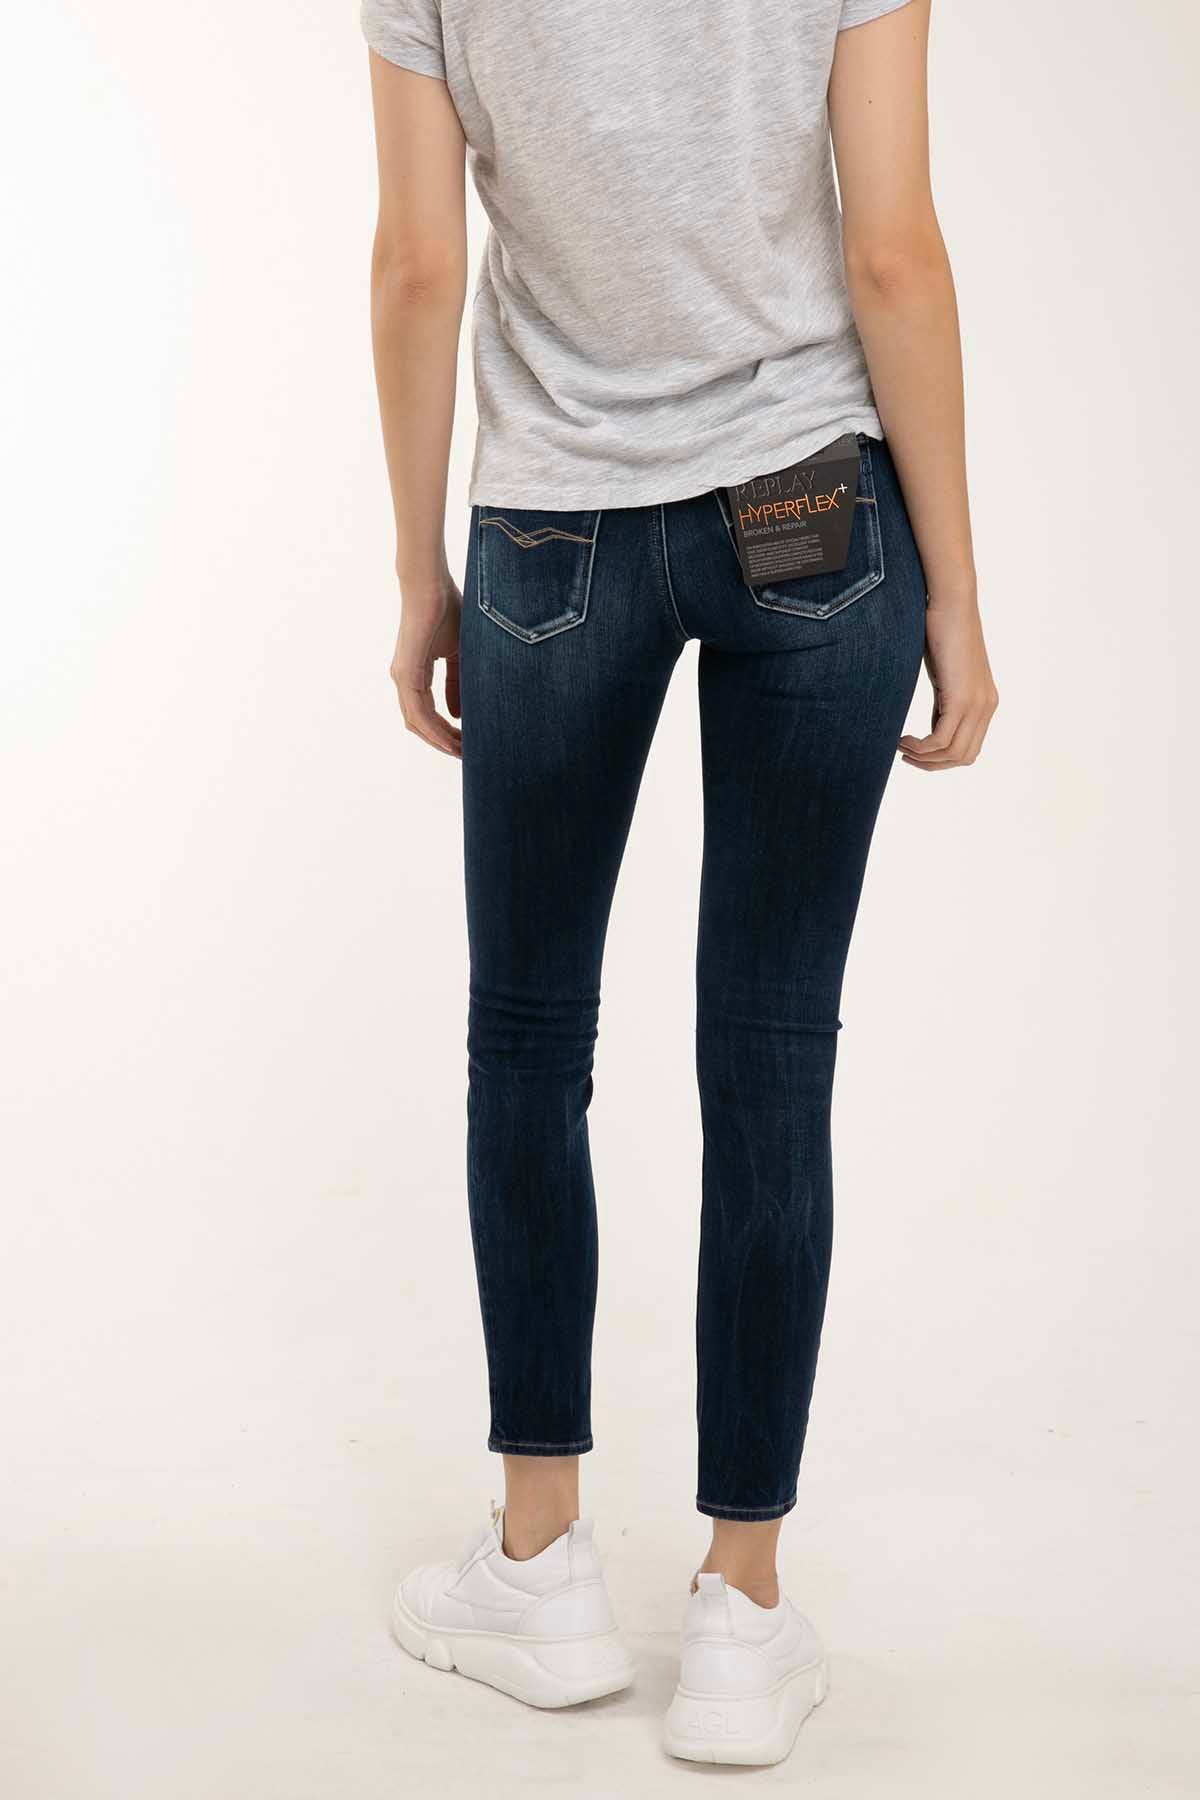 Replay Hyperflex Skinny Fit Jeans-Libas Trendy Fashion Store